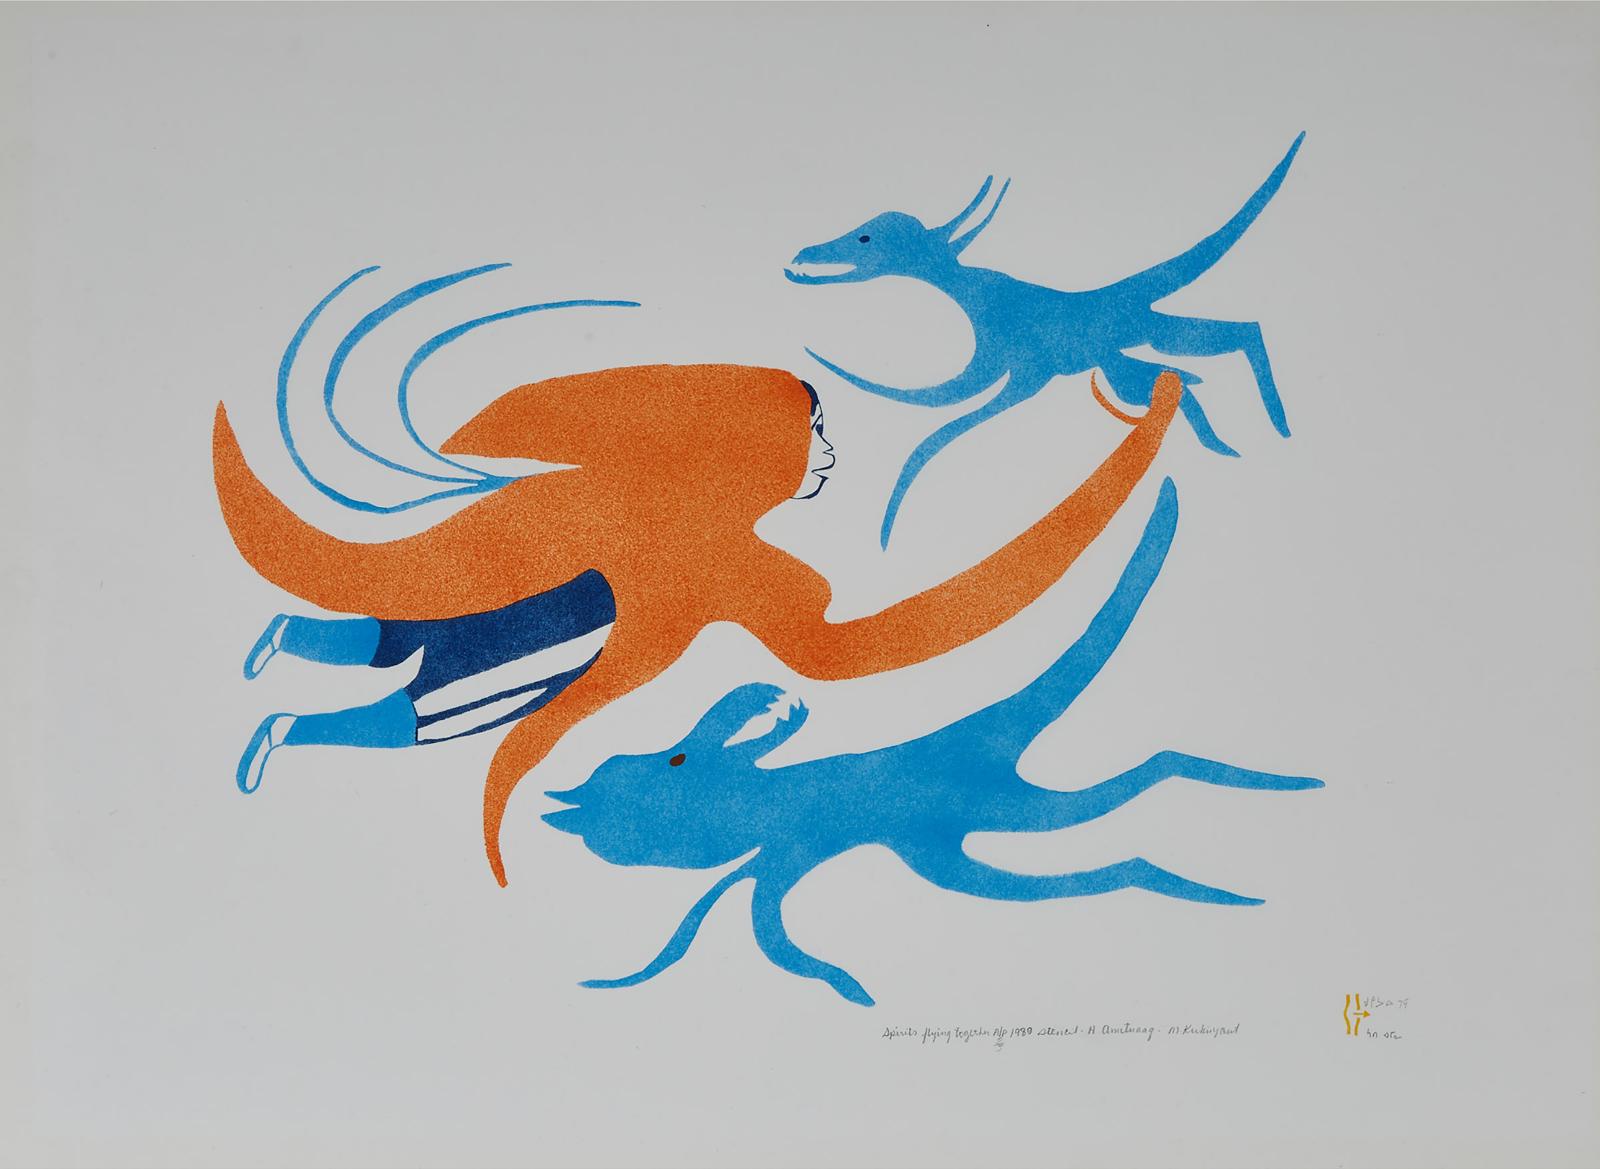 Myra Kukiiyaut (1929-2006) - Spirits Flying Together